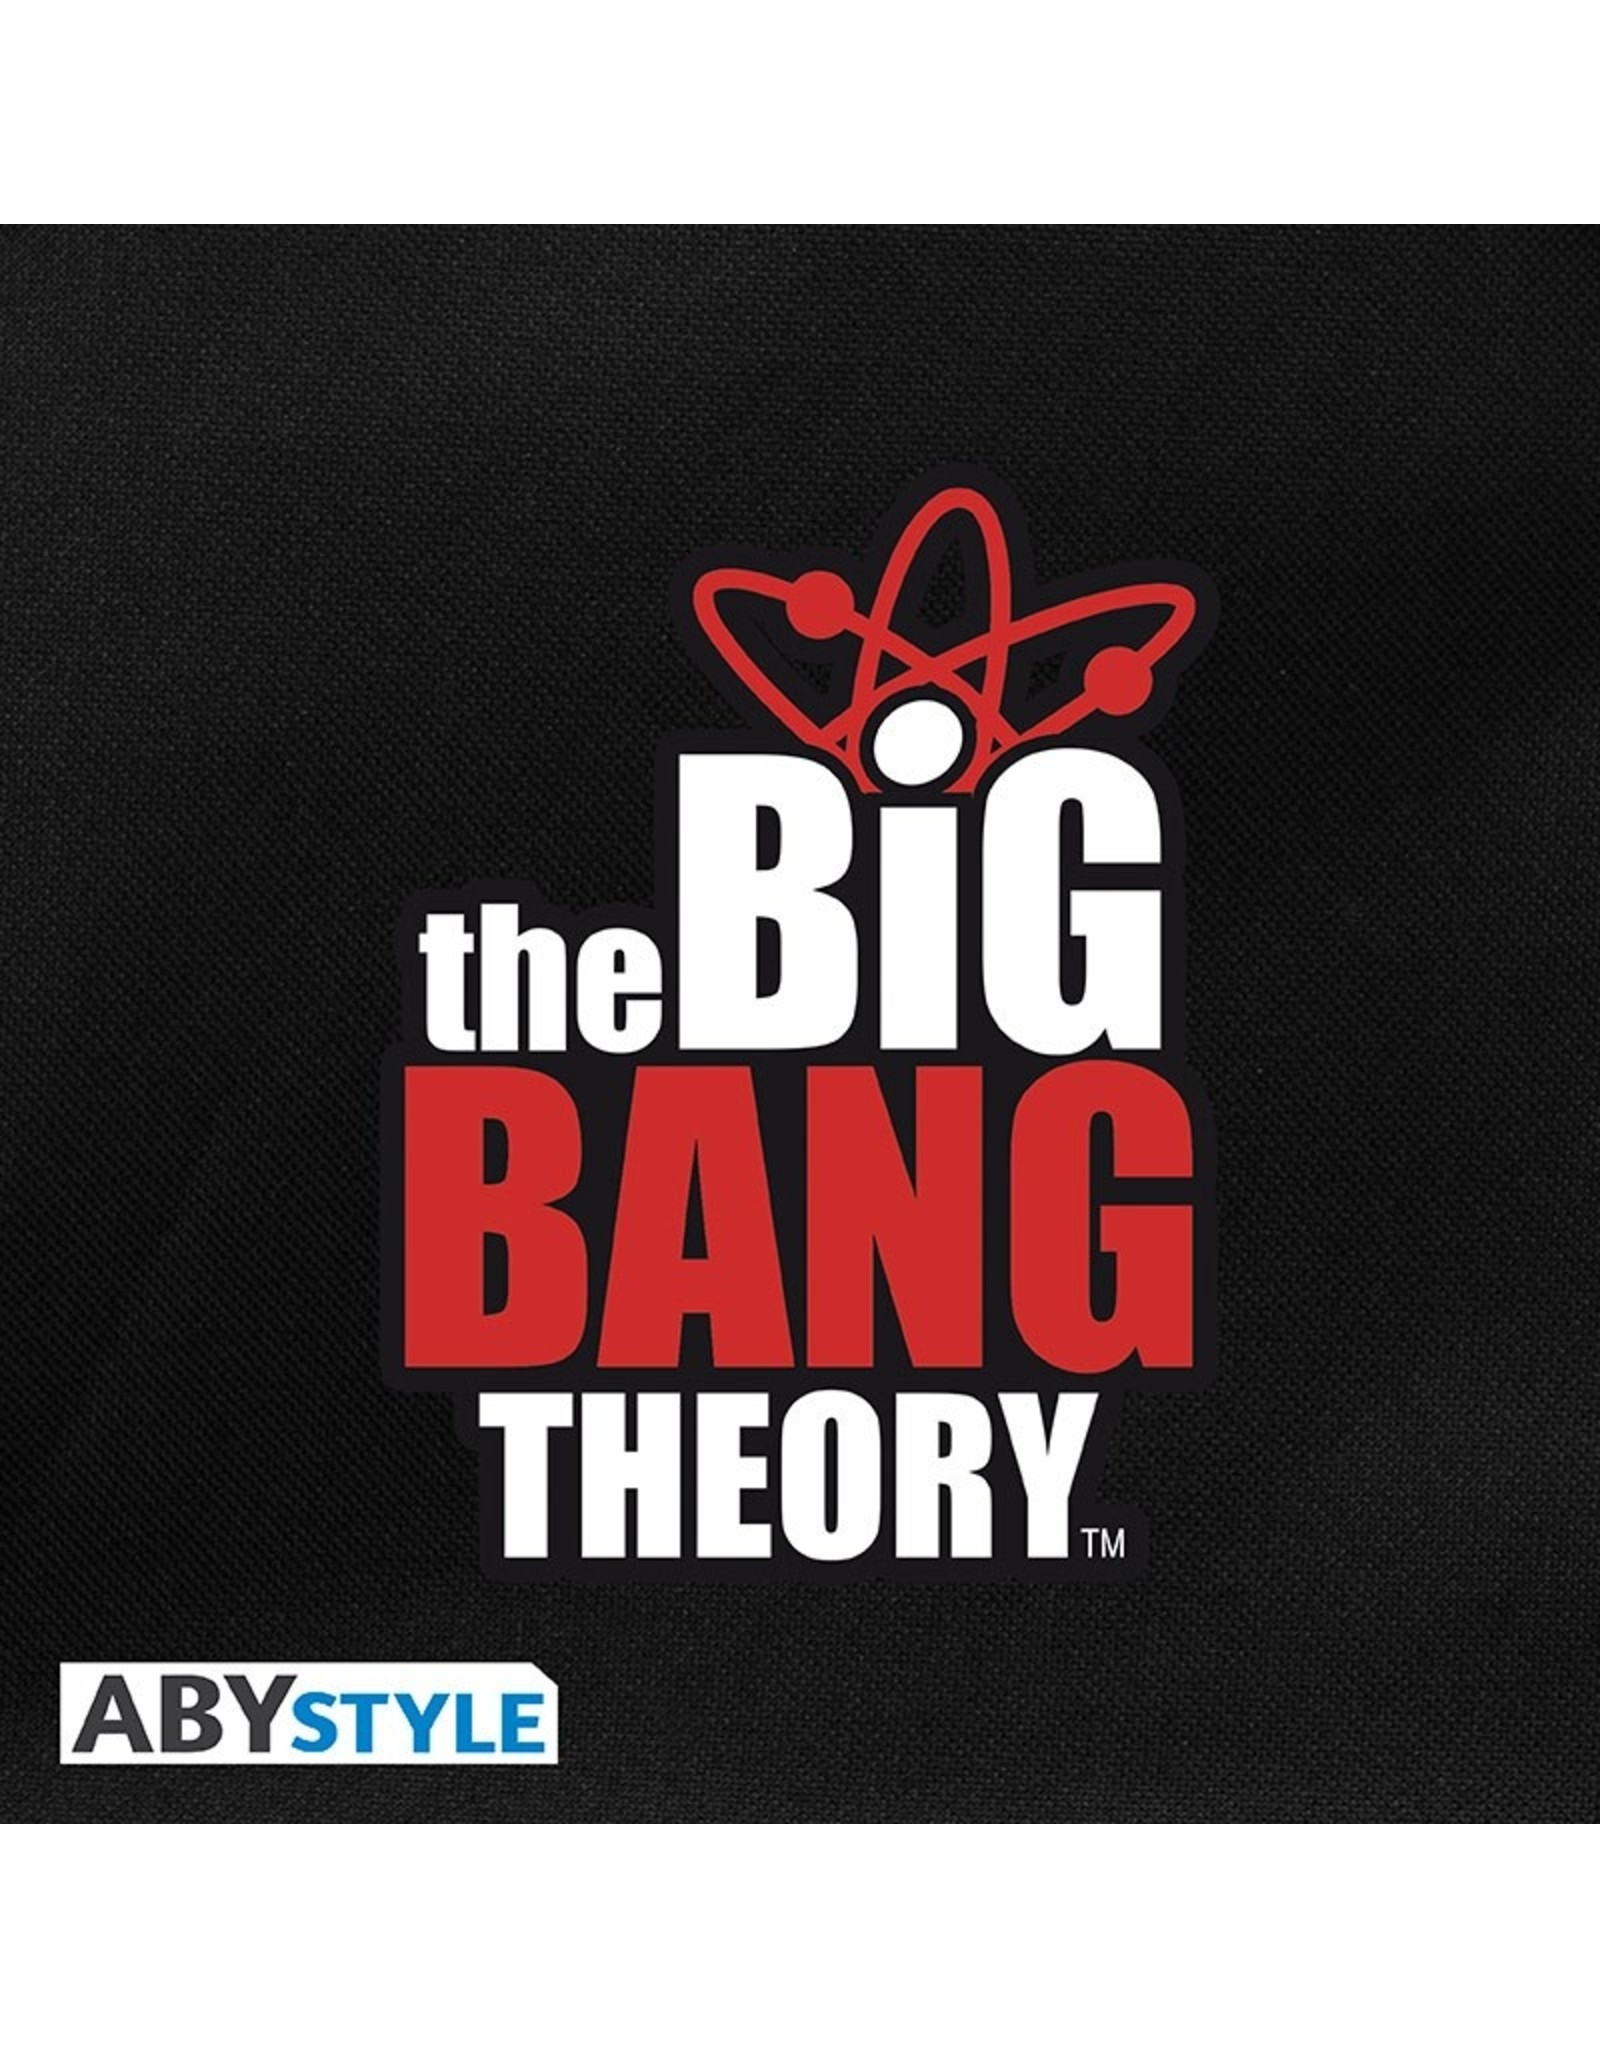 The Big Bang Theory Merchandise - The Big Bang Theory rugzak - 42cm